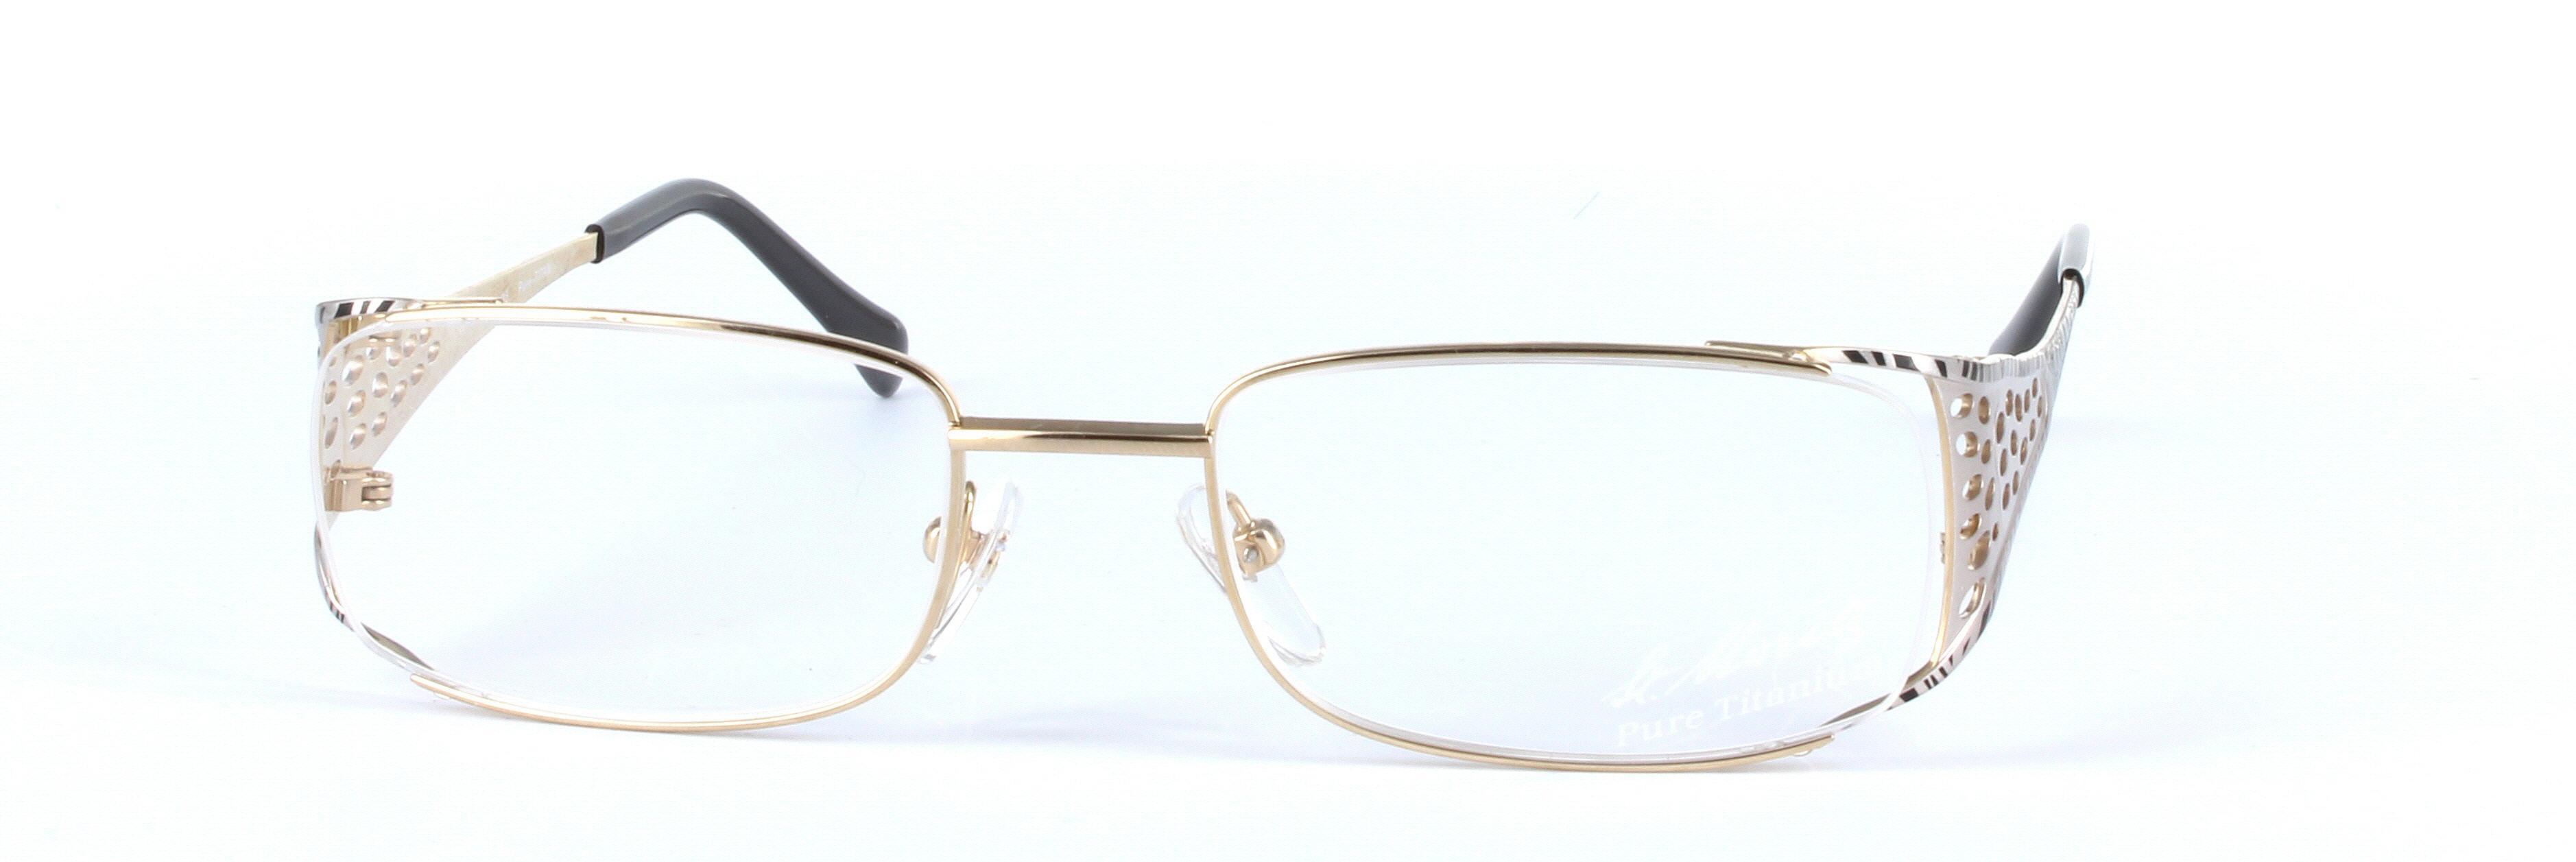 L'ART St-MORITZ (4782-004) Gold Full Rim Rectangular Metal Glasses - Image View 5